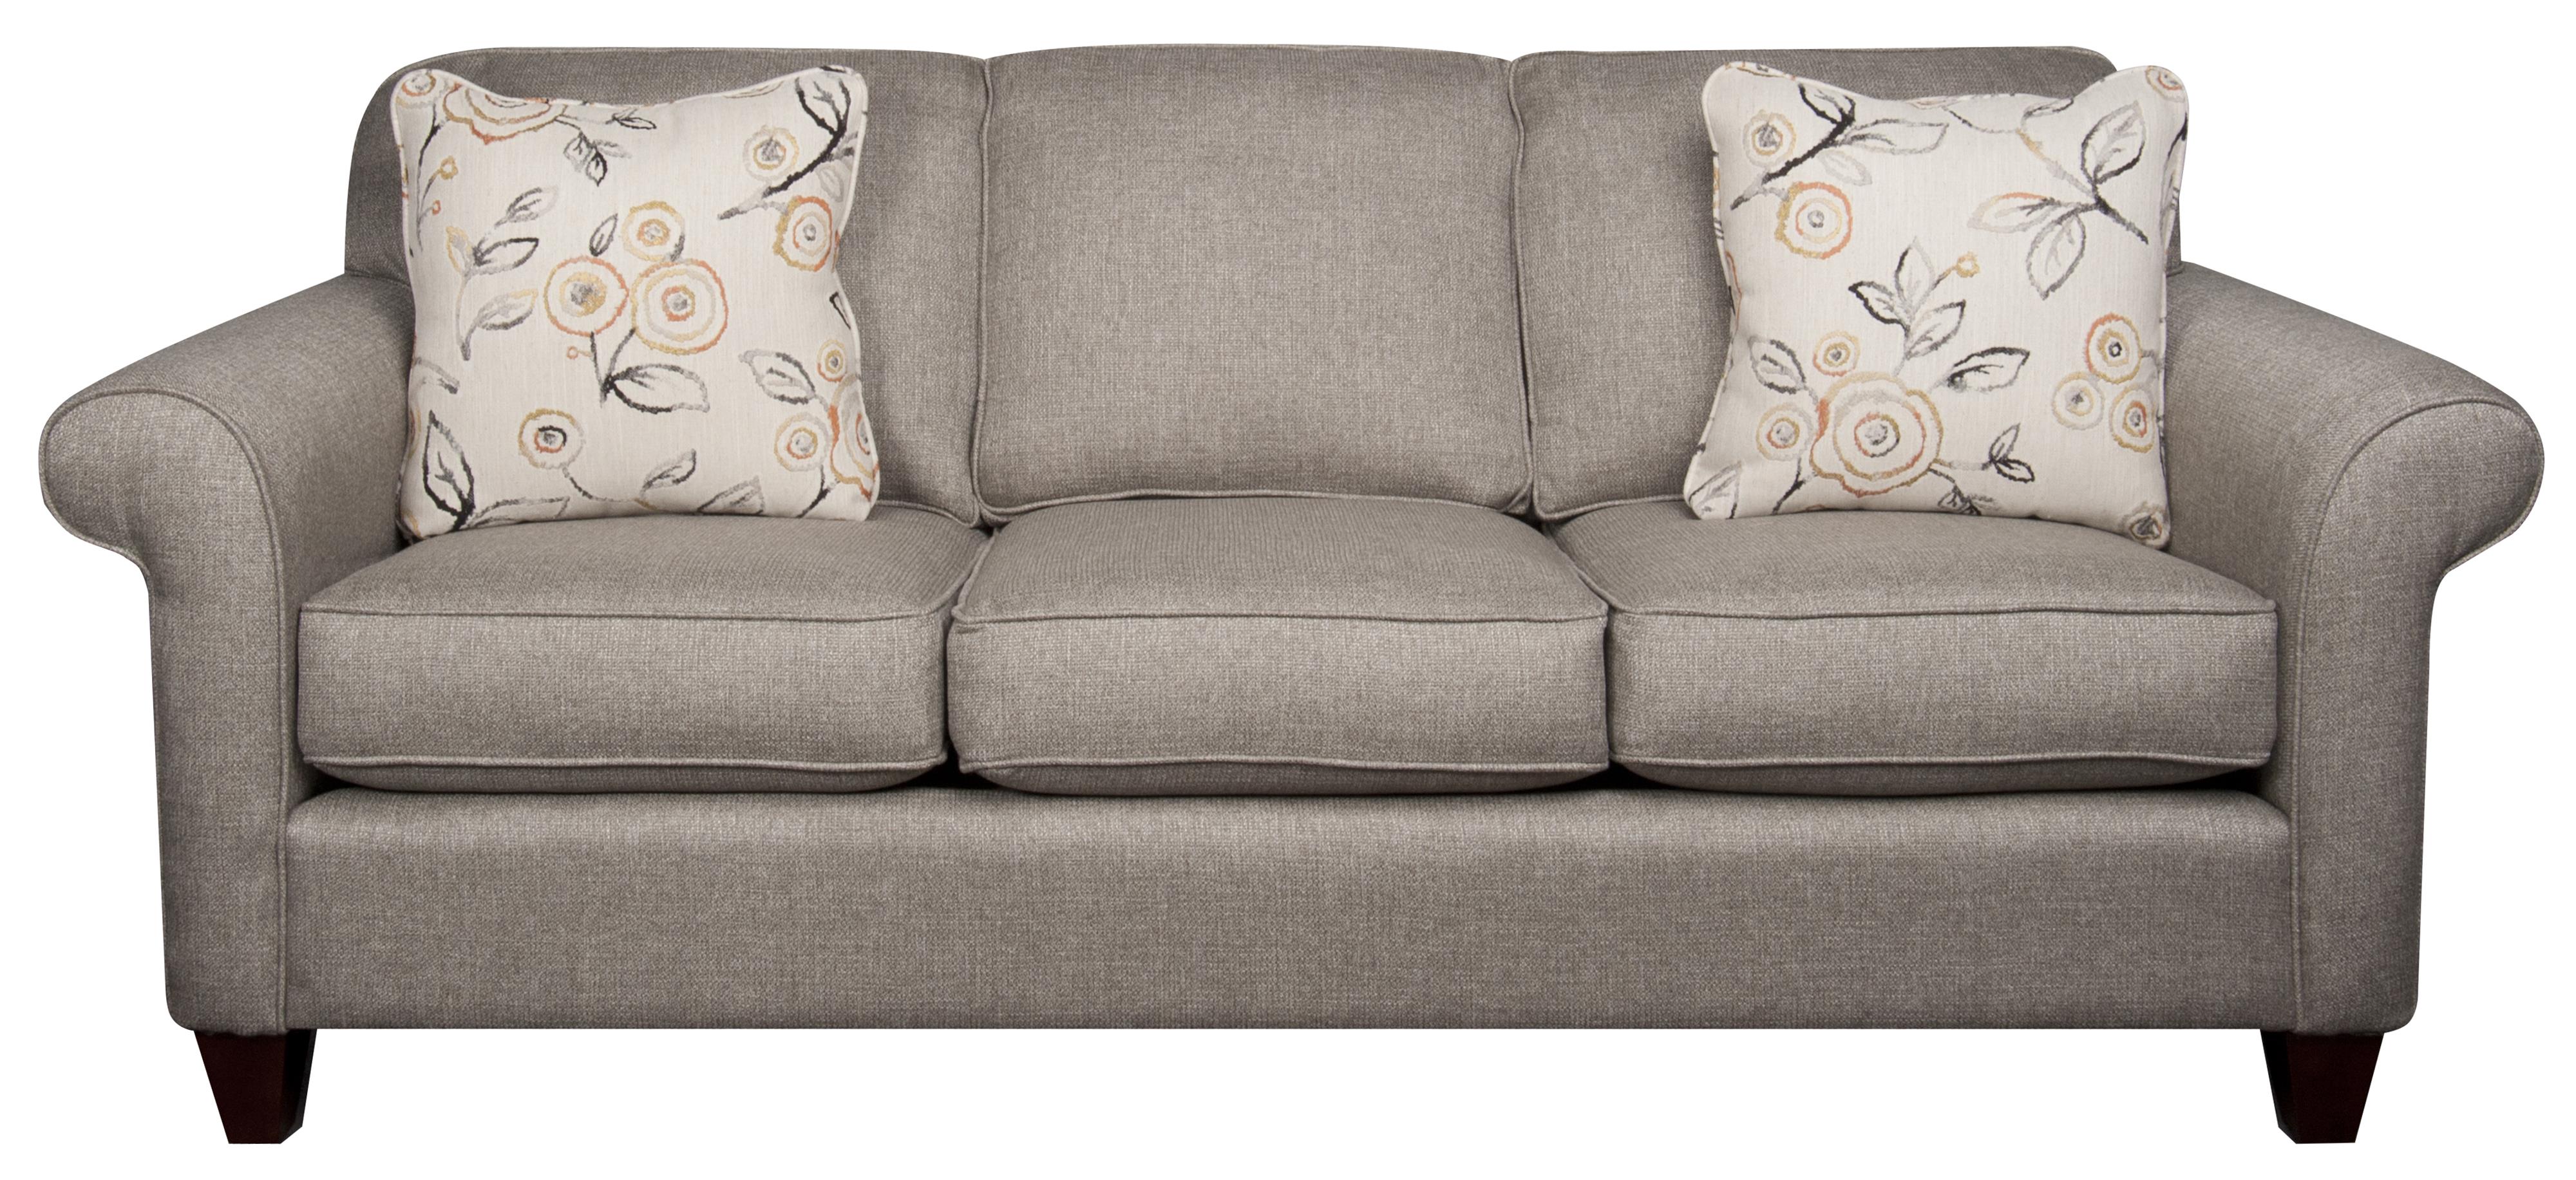 Sarah Revolution Fabric Sofa